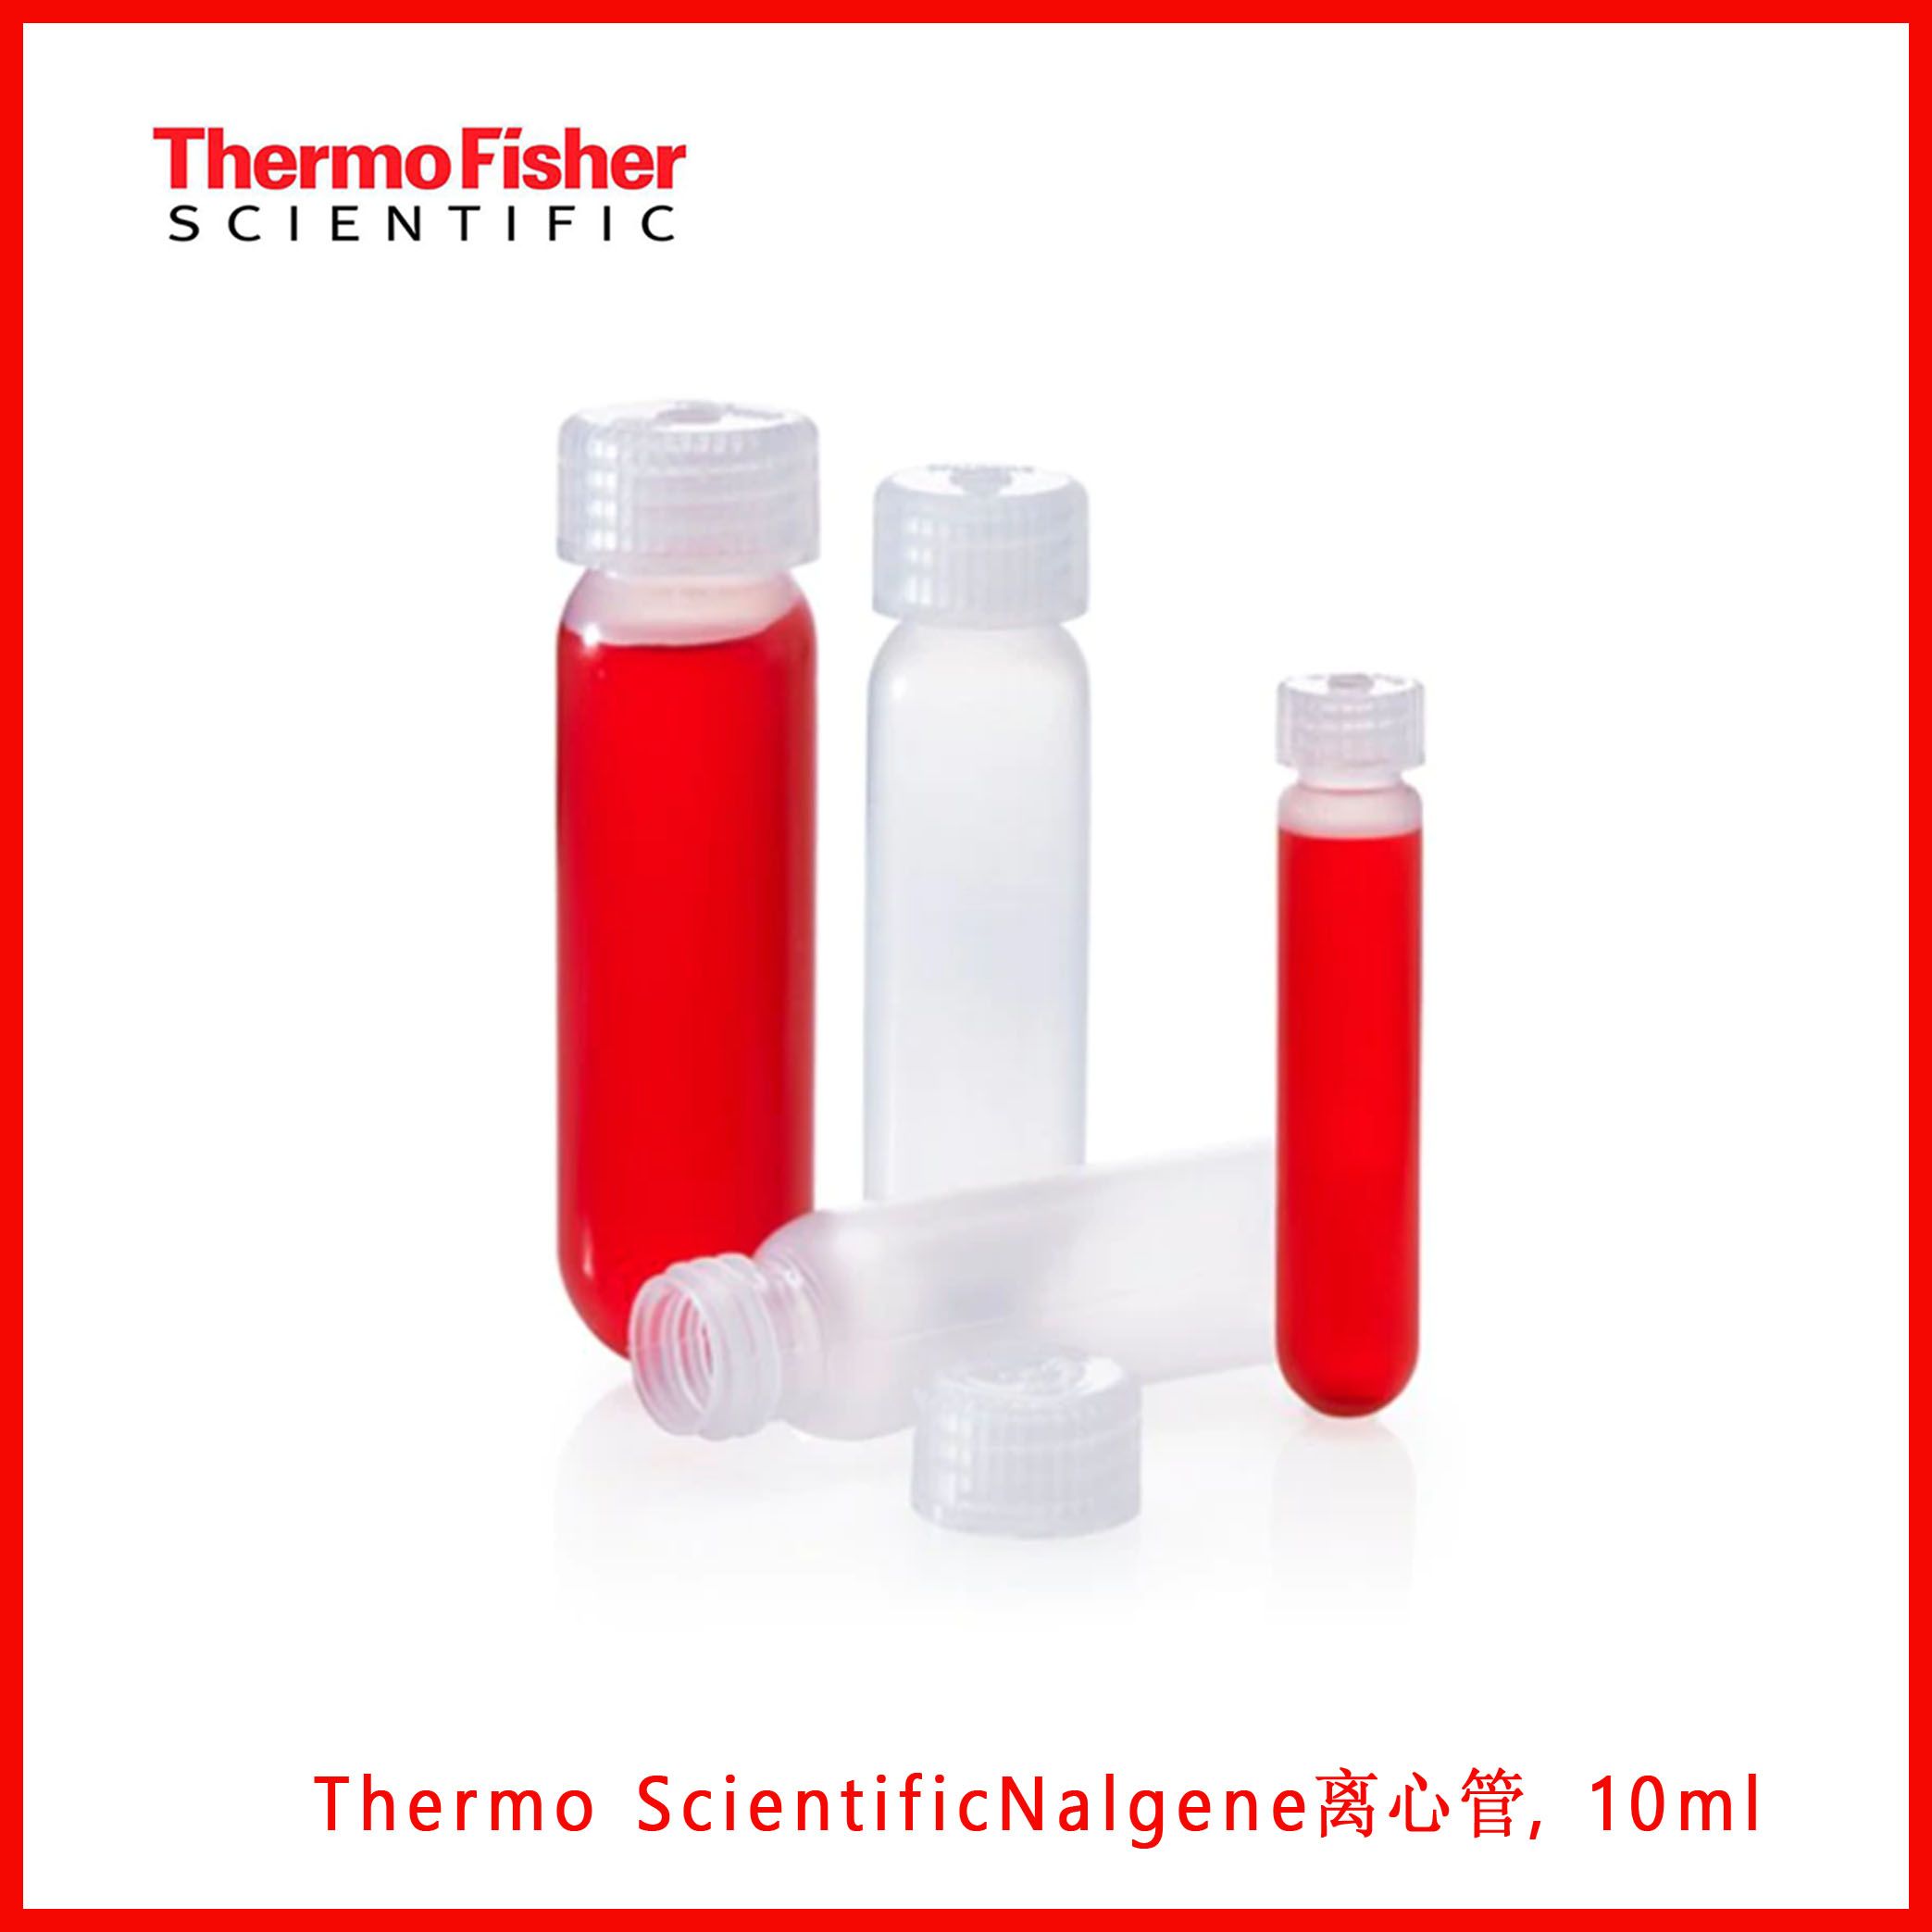 Thermo ScientificNalgene离心管, 10ml；PPCO材质；16.0x81.4mm；离心力50000g,100只/箱,现货